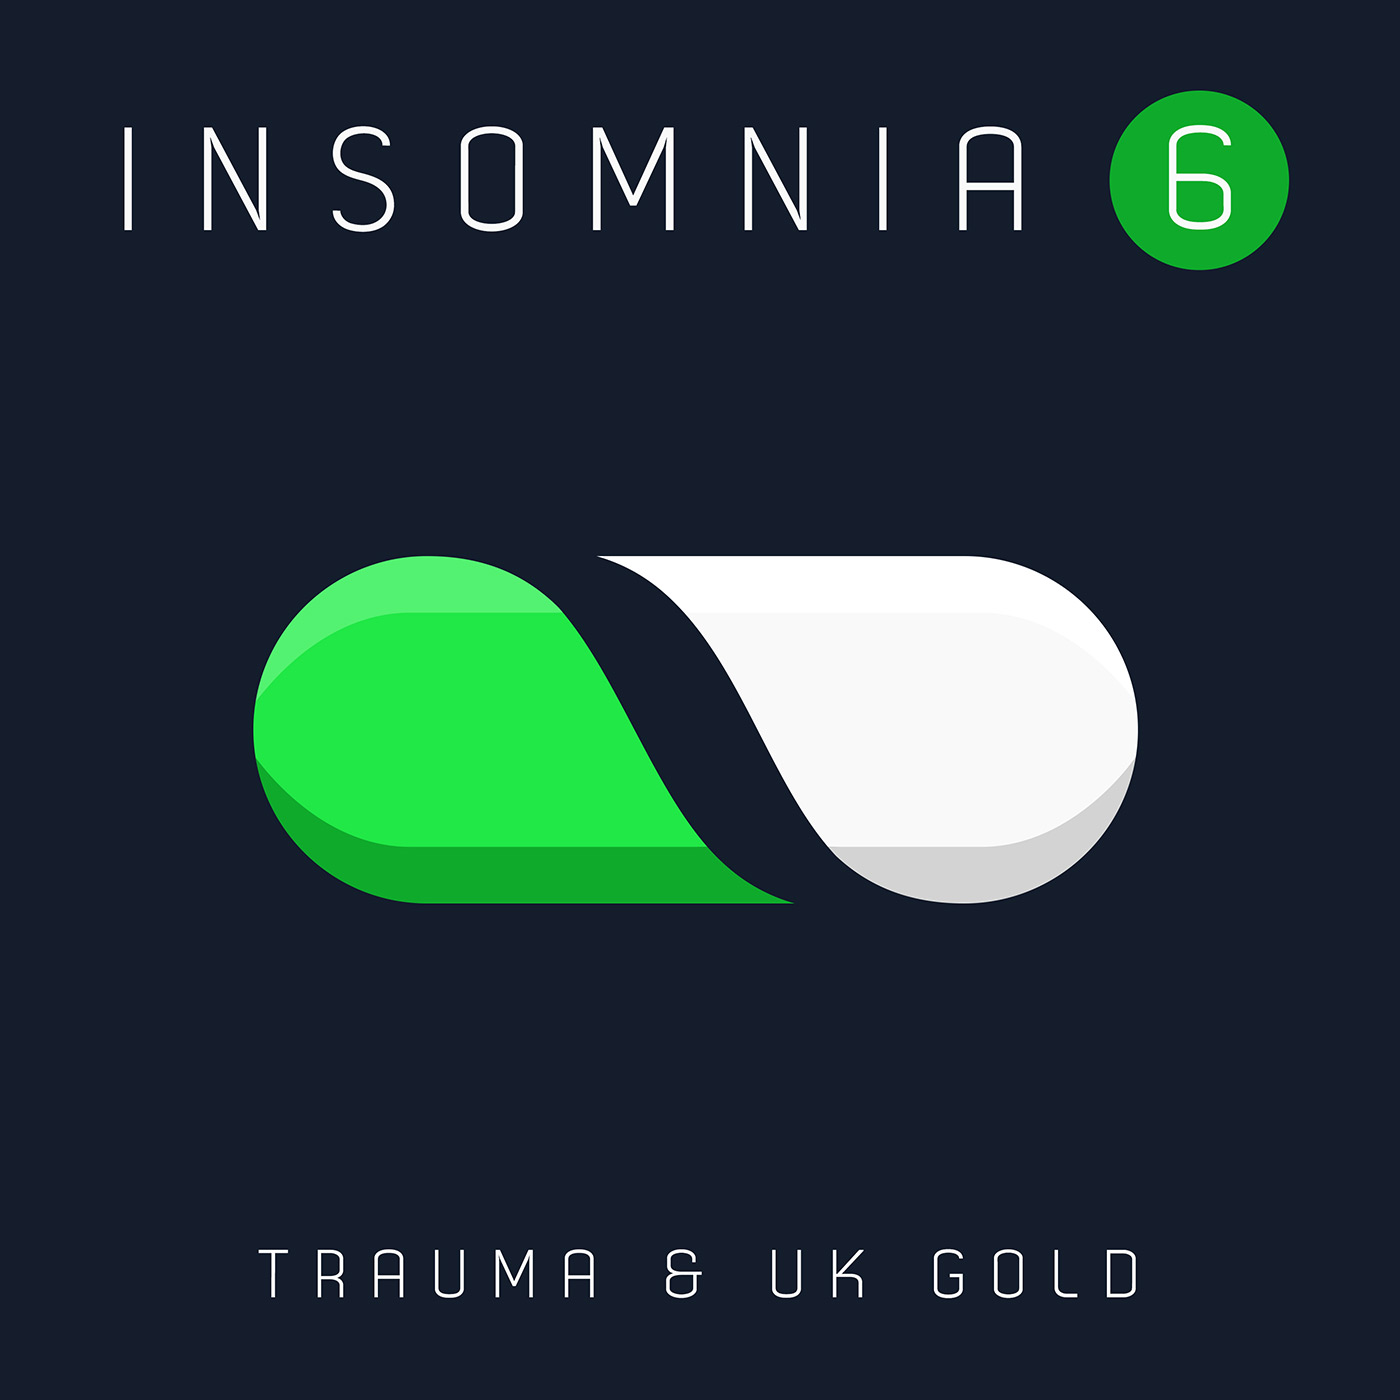 Insomnia 6 - Paul King & UK Gold